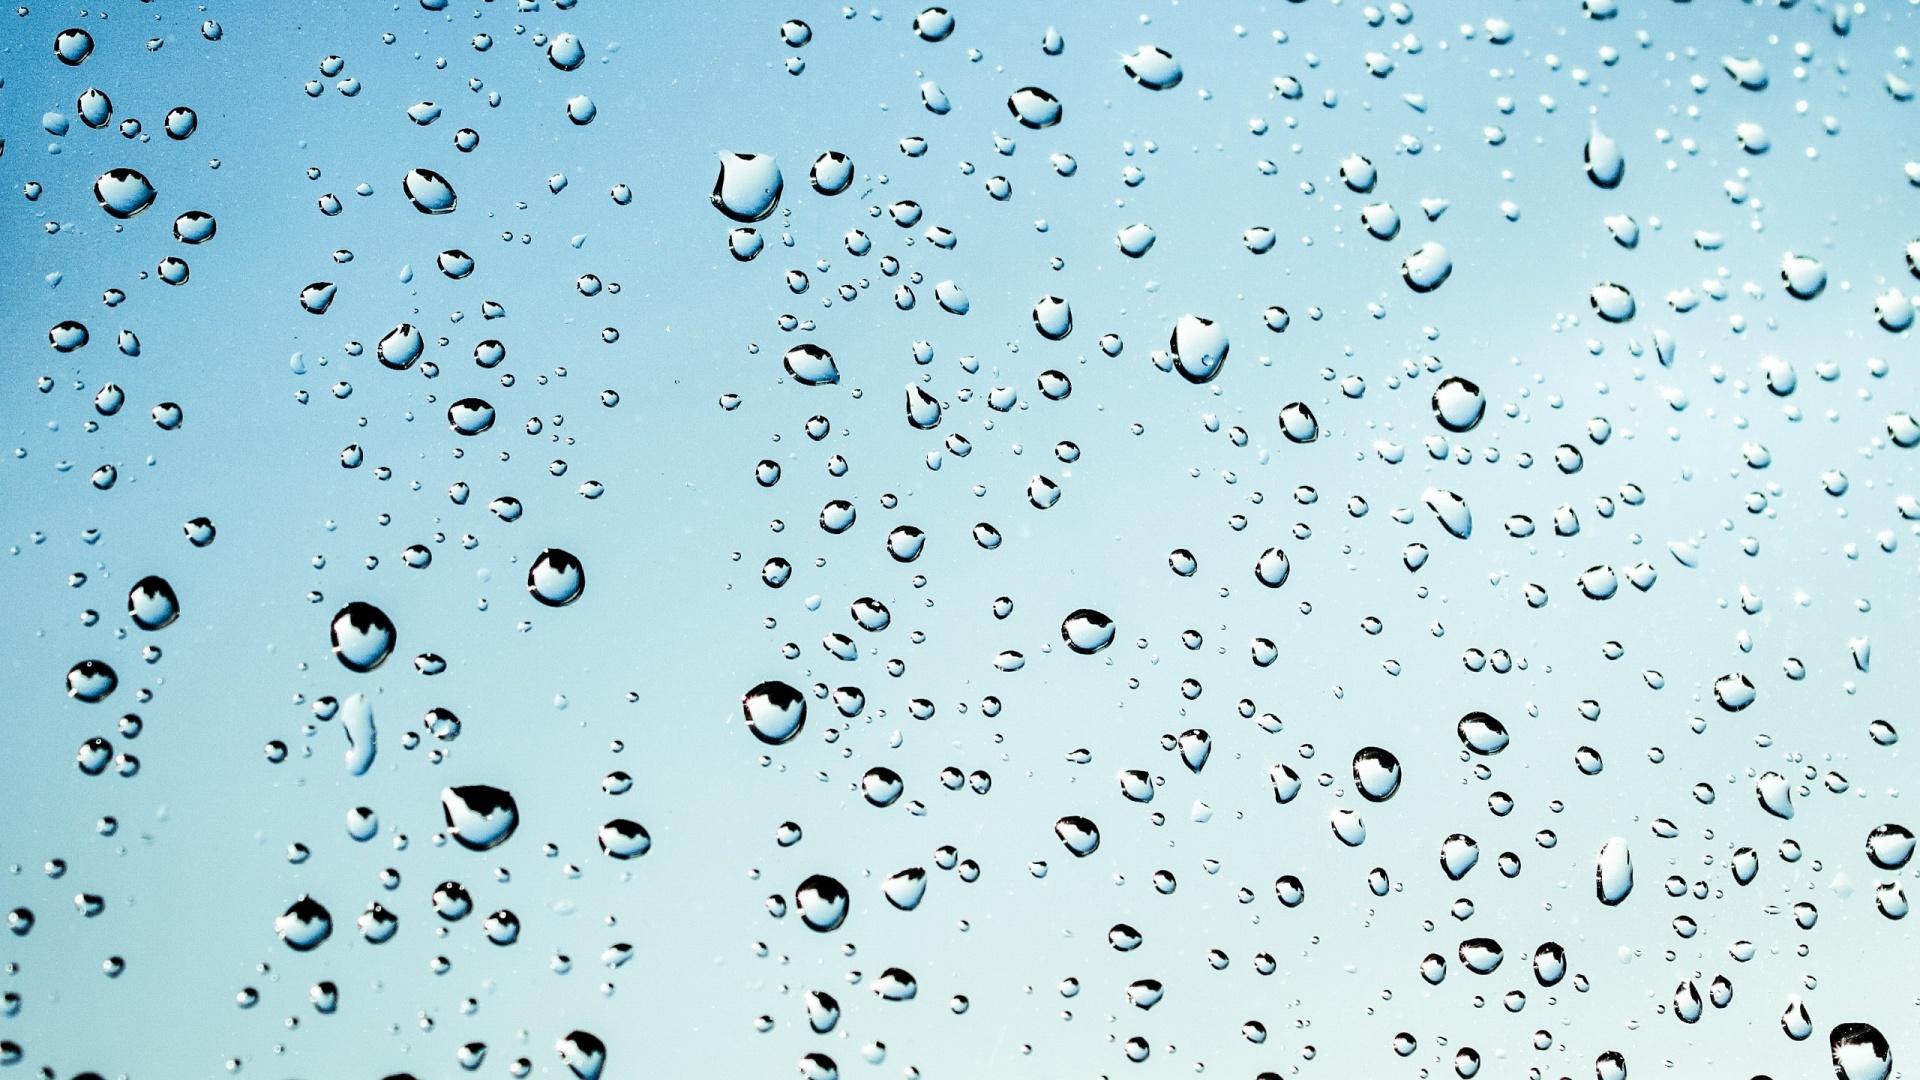 windows drops raindrops free photo